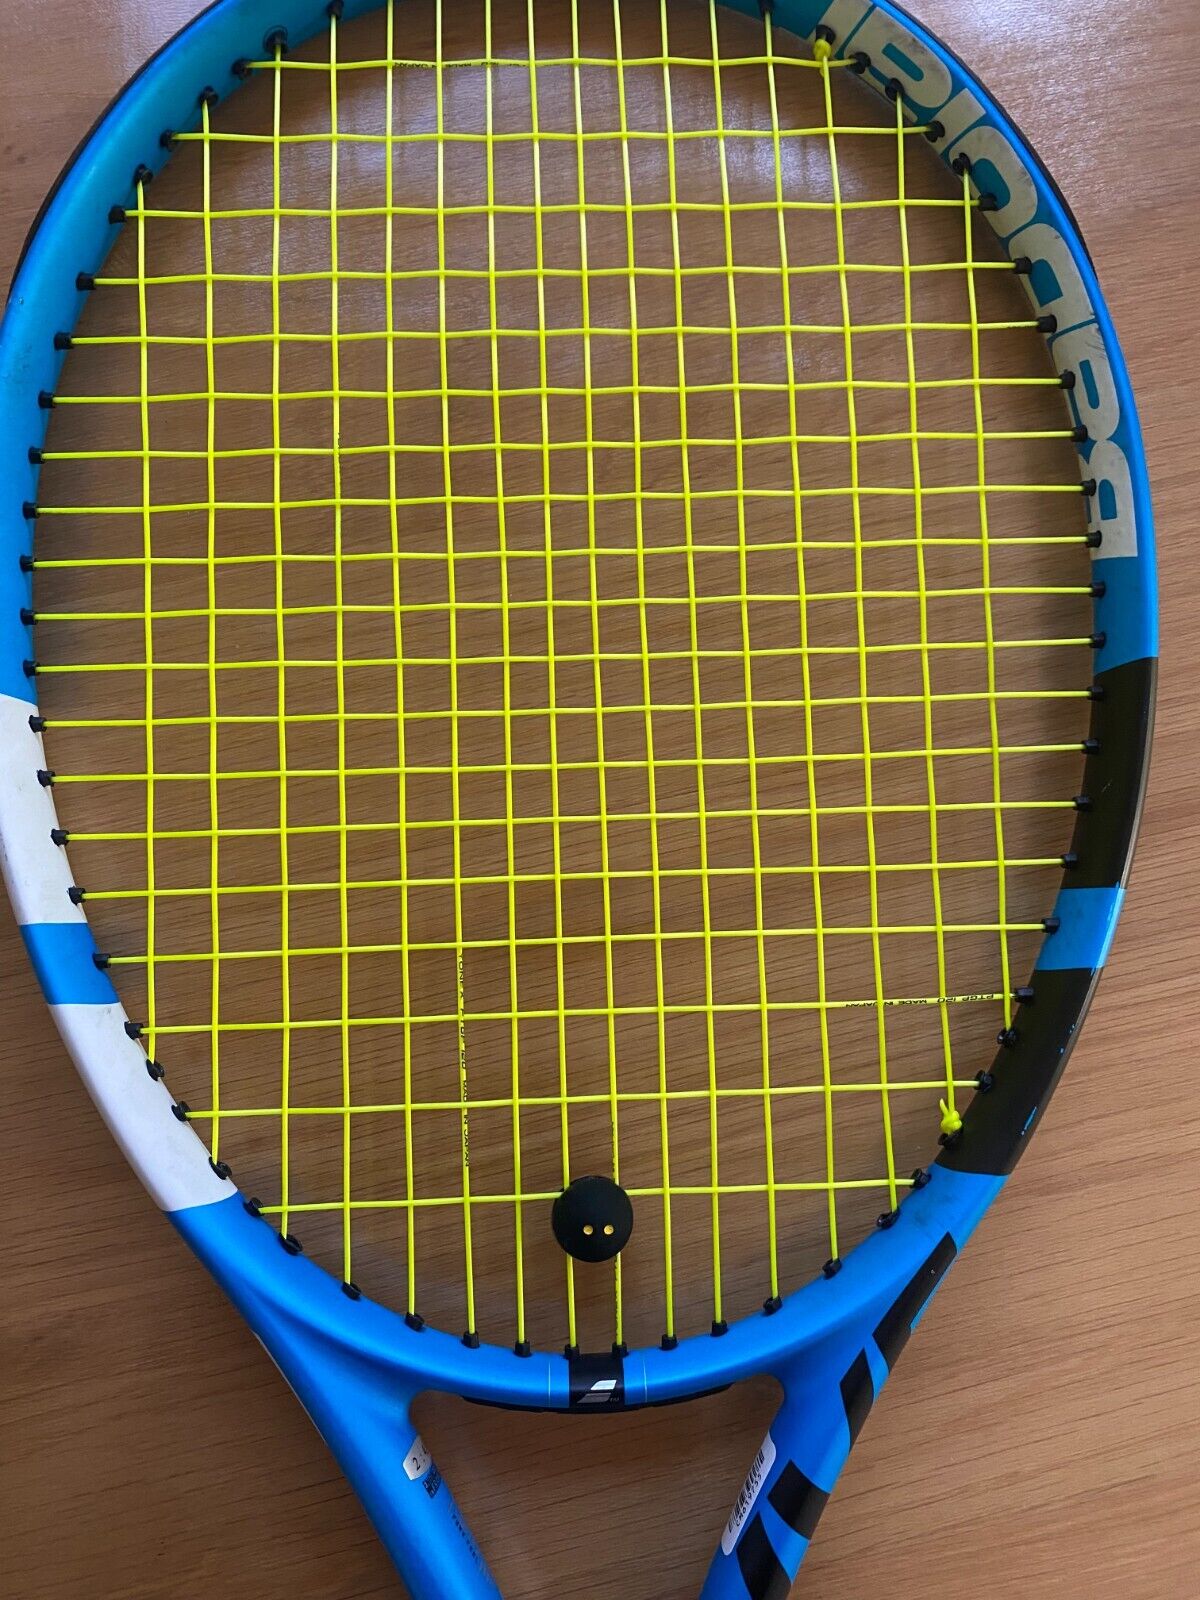 Dunlop Tennis Squash Vibration Dampener Shock Absorber Damper Ball 2 Pieces